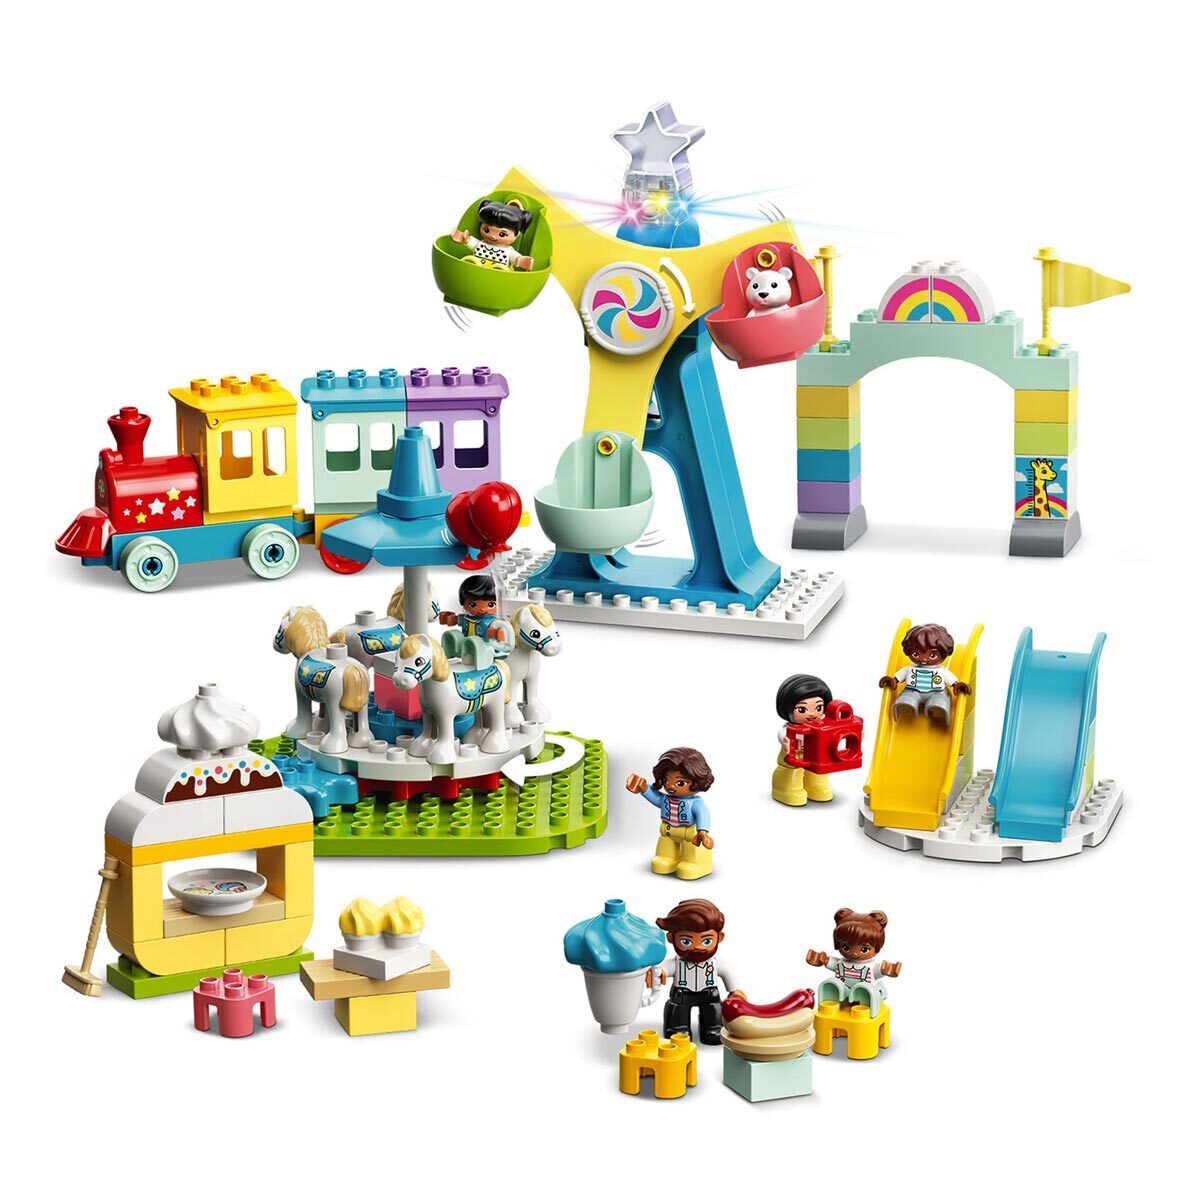 Buy LEGO DUPLO Amusement Park Overview Image at costco.co.uk